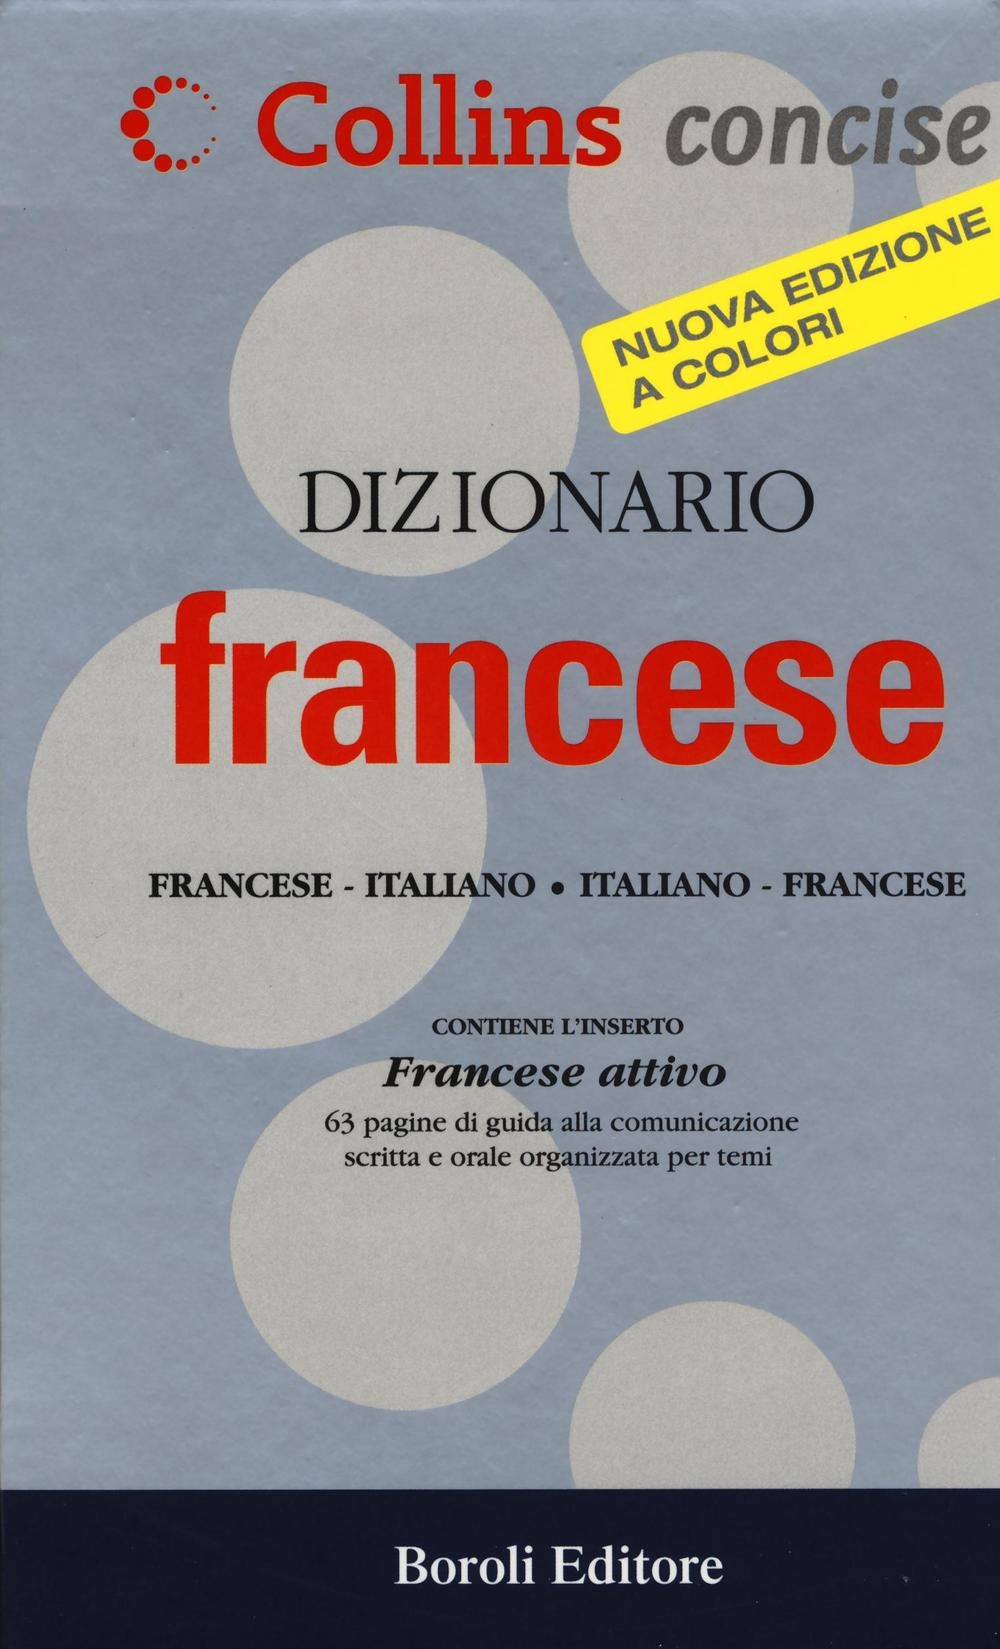 Image of Dizionario francese. Francese-italiano, italiano-francese